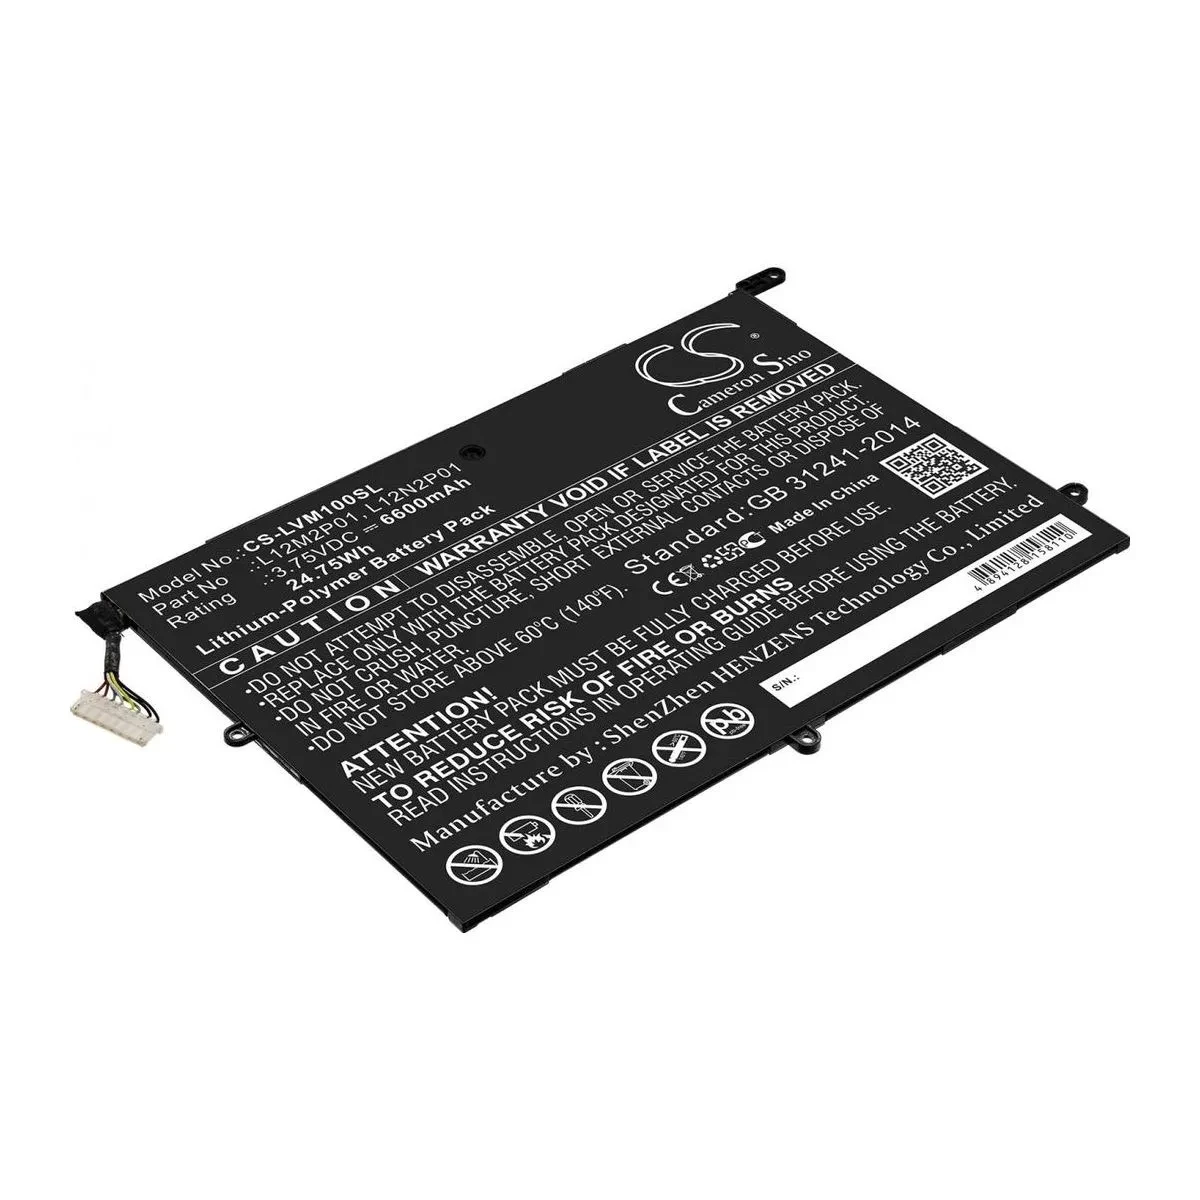 L12M2P01 (CS-LVM100SL) Lenovo ThinkPad Tablet 2 10.1 Miix 10 (6600 mAh батарея аккумулятор на планшет леново